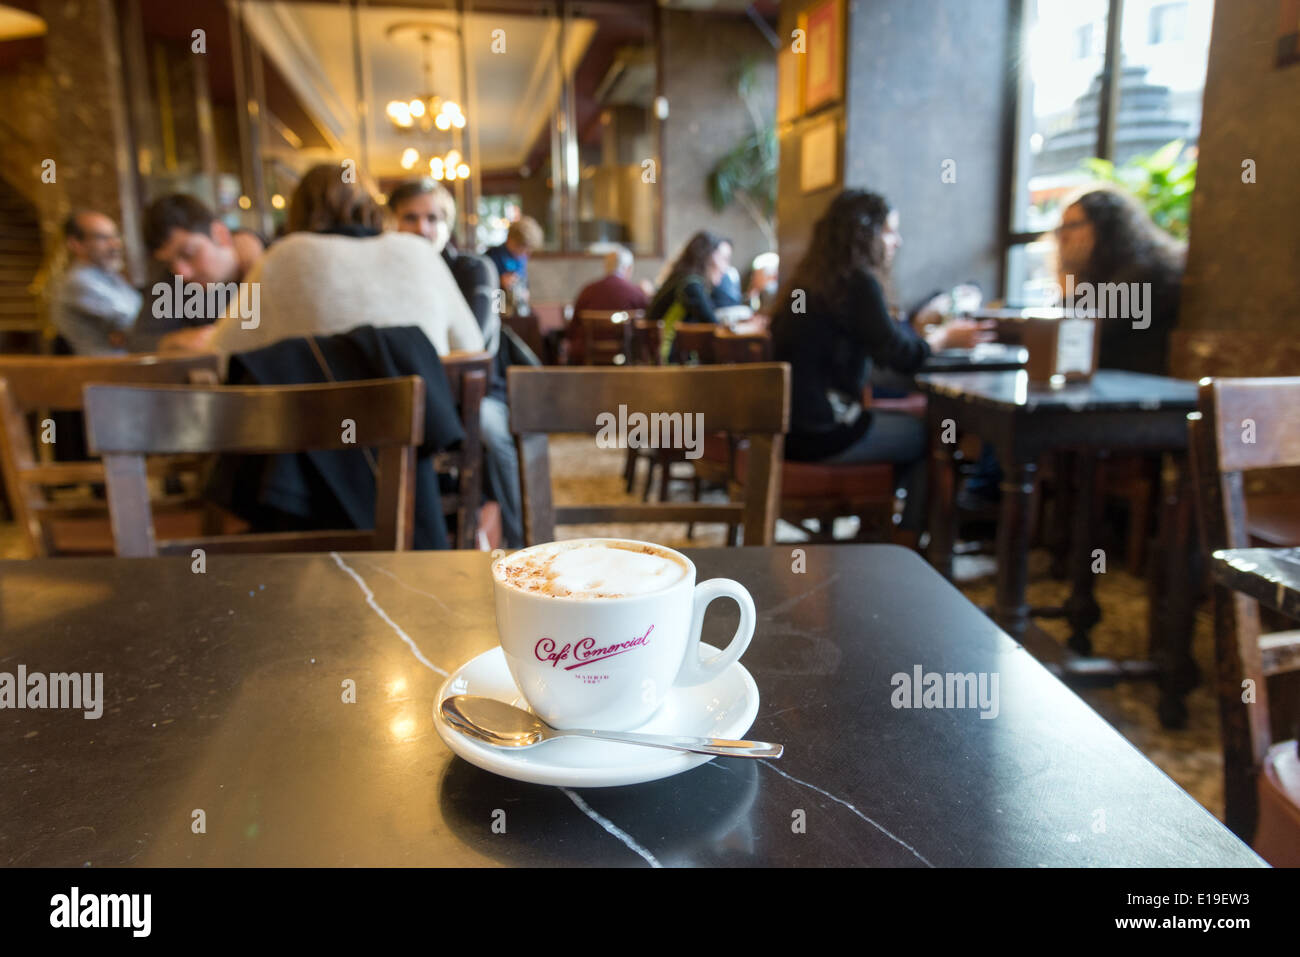 Cafe Comercial on the Glorieta de Bilbao, Madrid, Spain Stock Photo